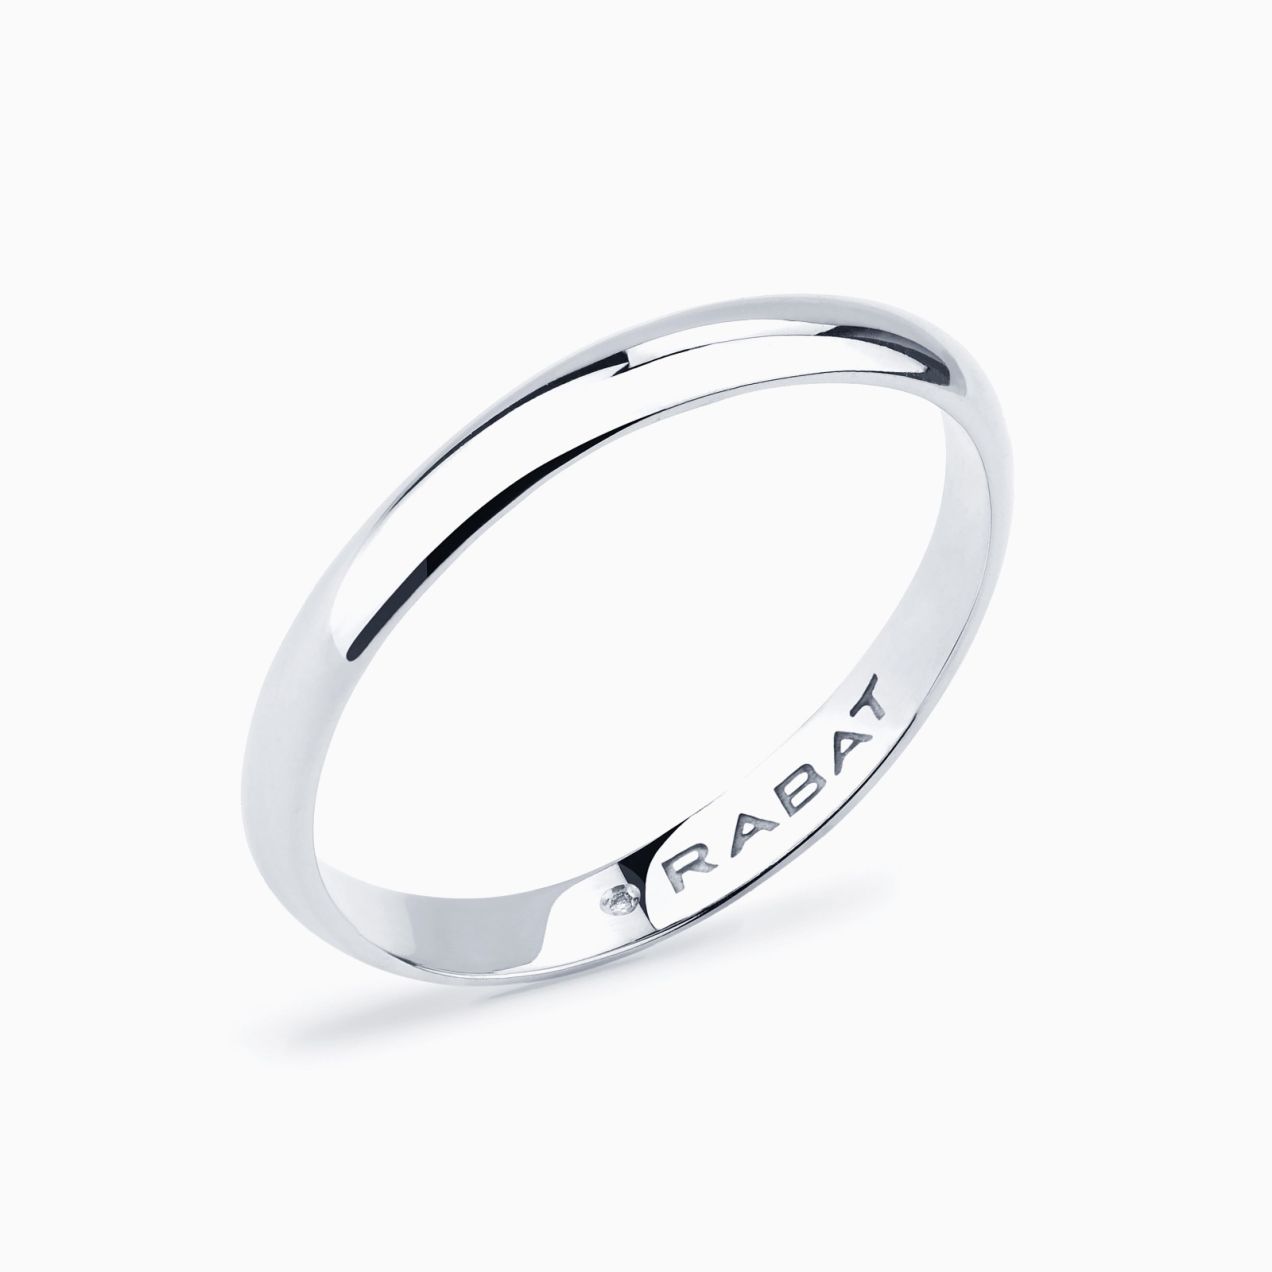 White gold half-round wedding ring